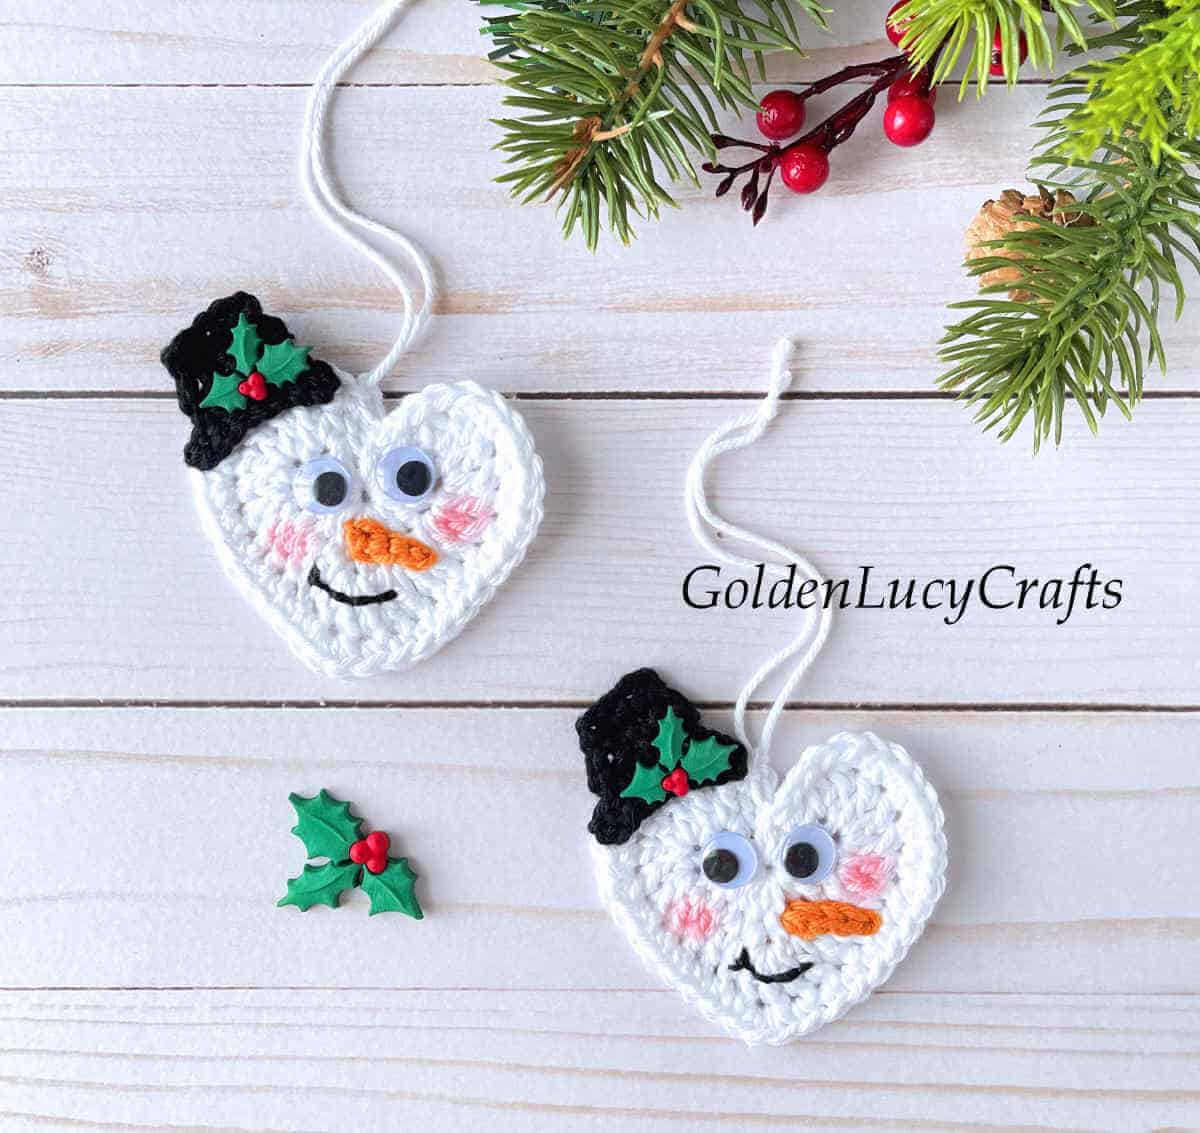 Two crochet heart-shaped snowman Christmas ornaments.